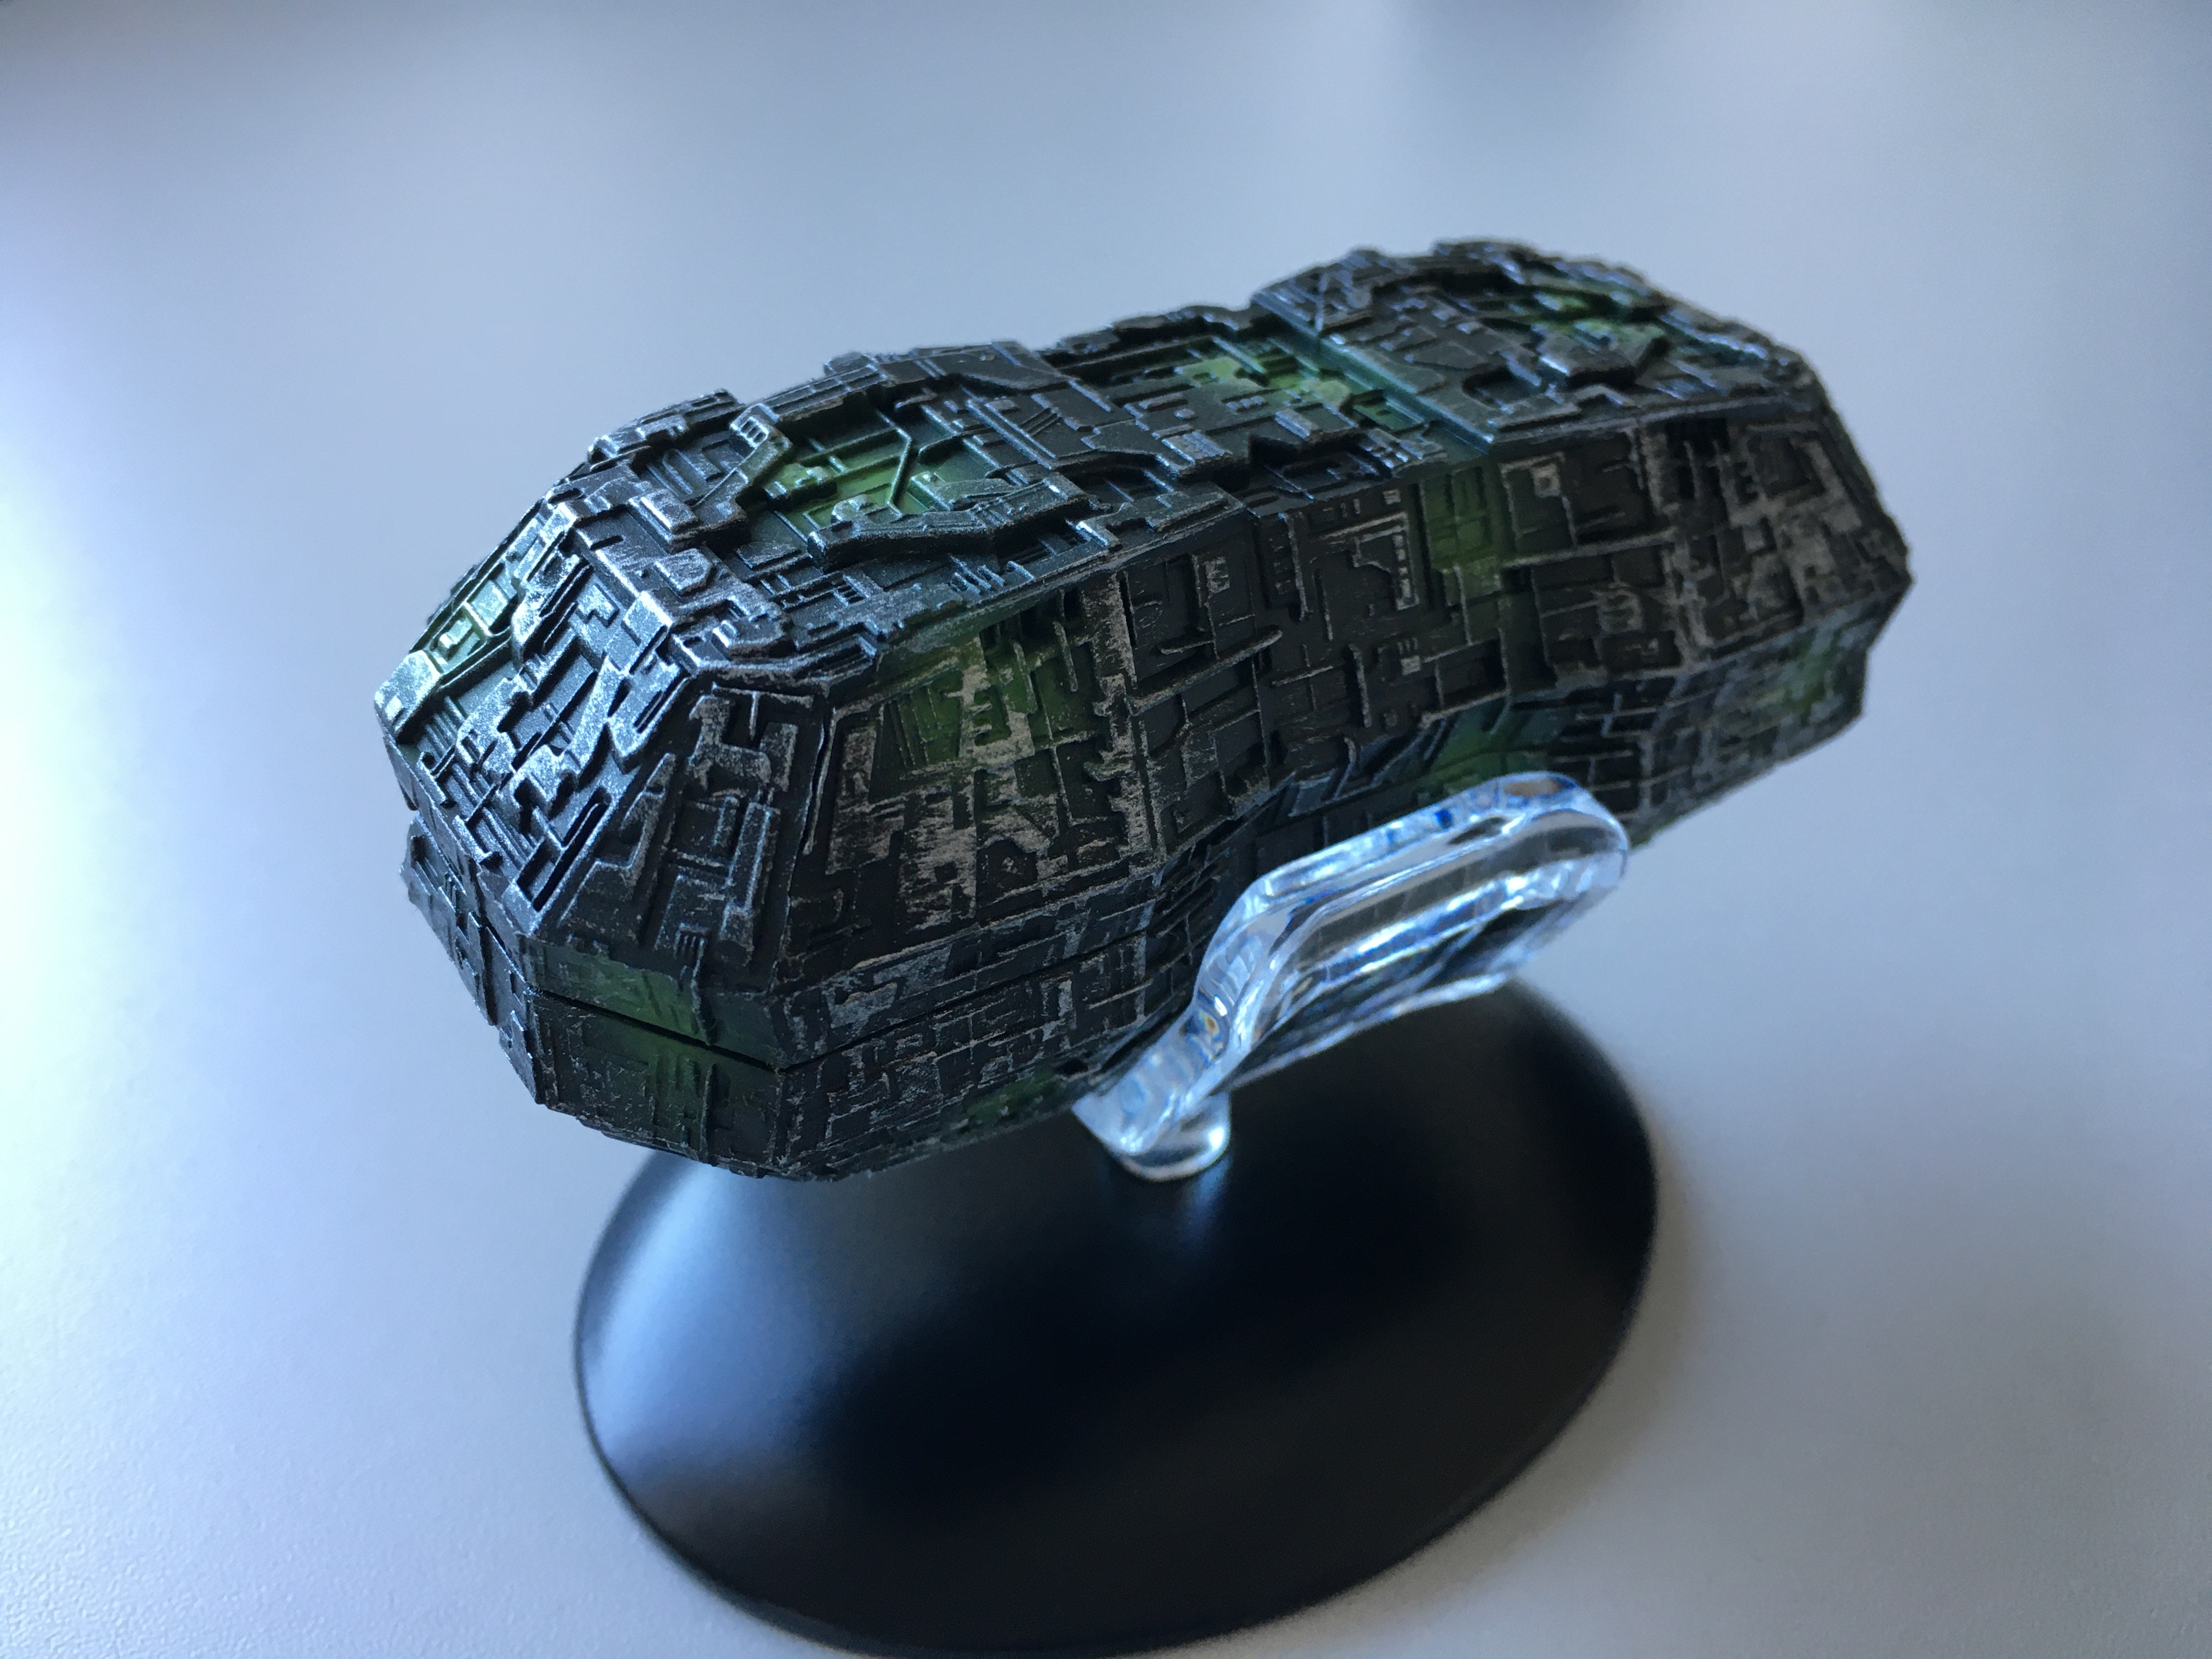 Die Borg-Sonde als Miniaturmodell (Foto: Star Trek HD)